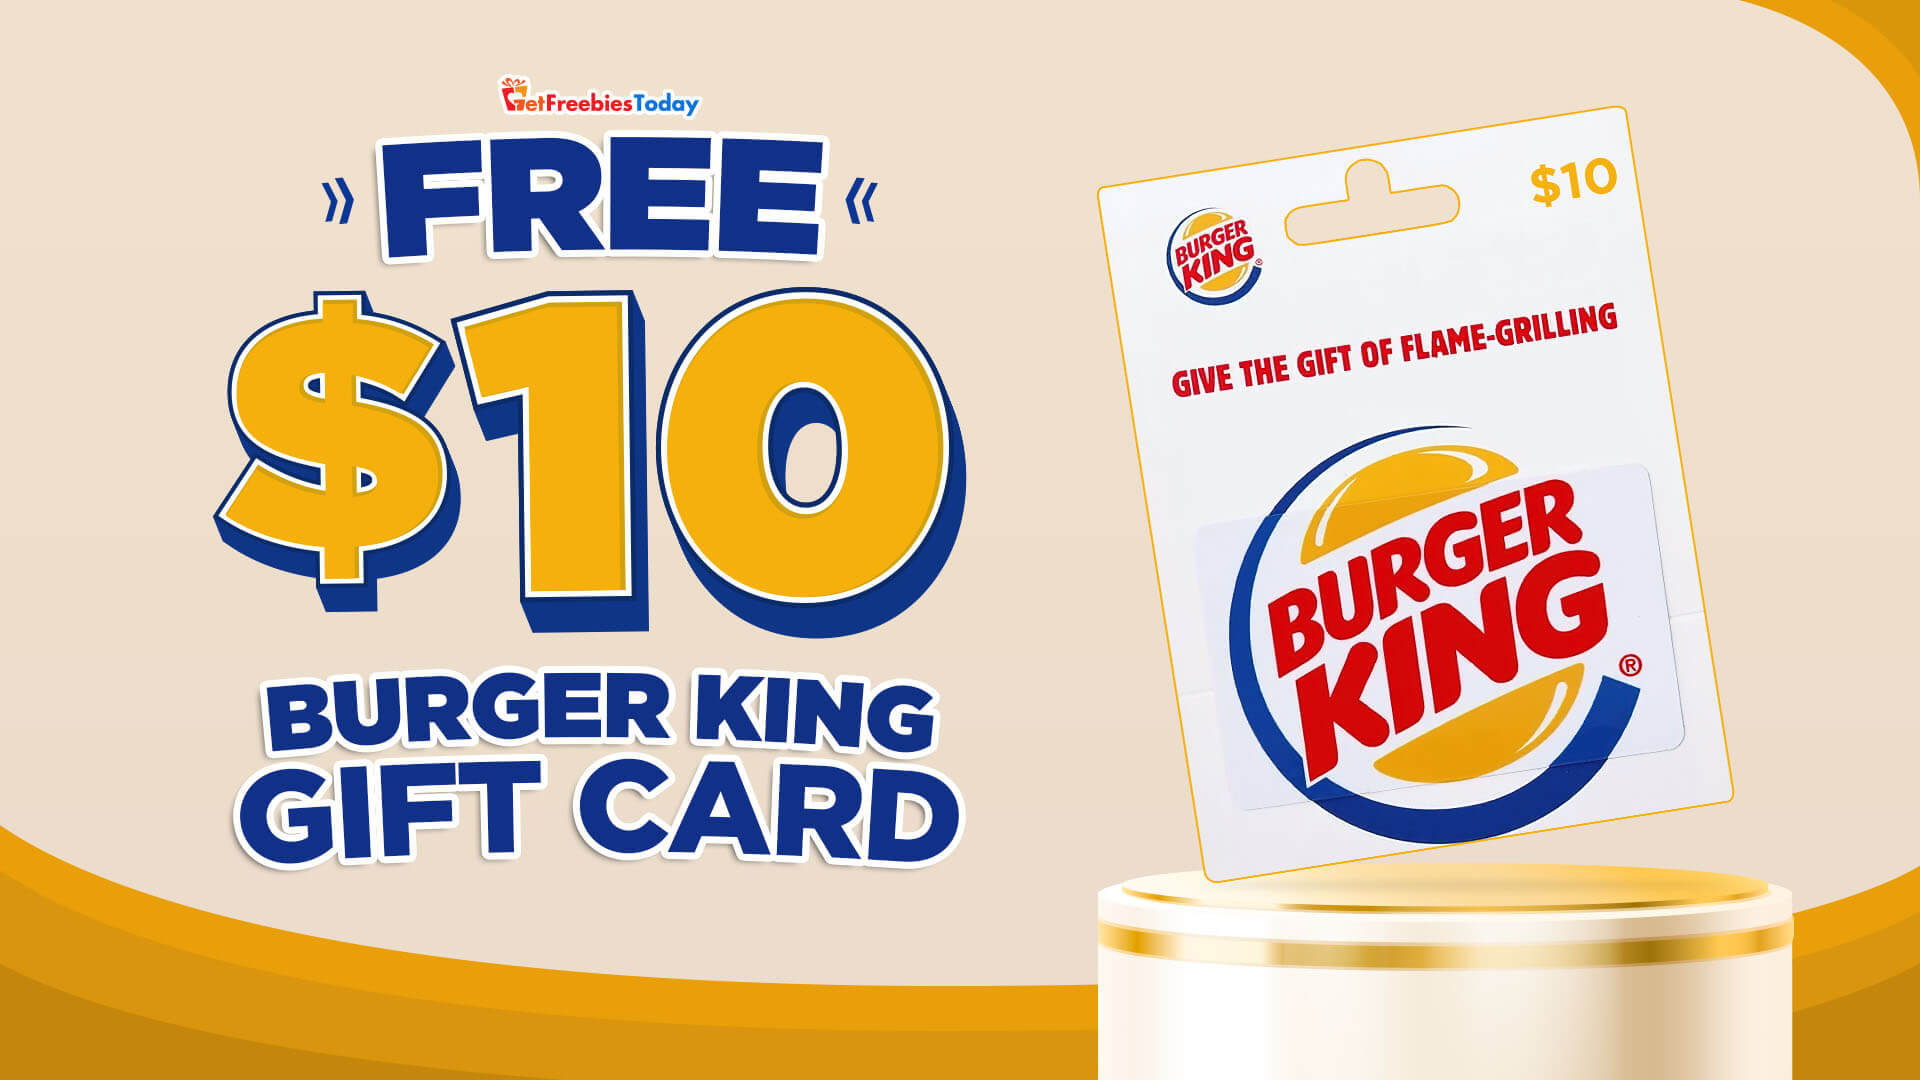 Free $10 Burger King Gift Card | GetFreebiesToday.com